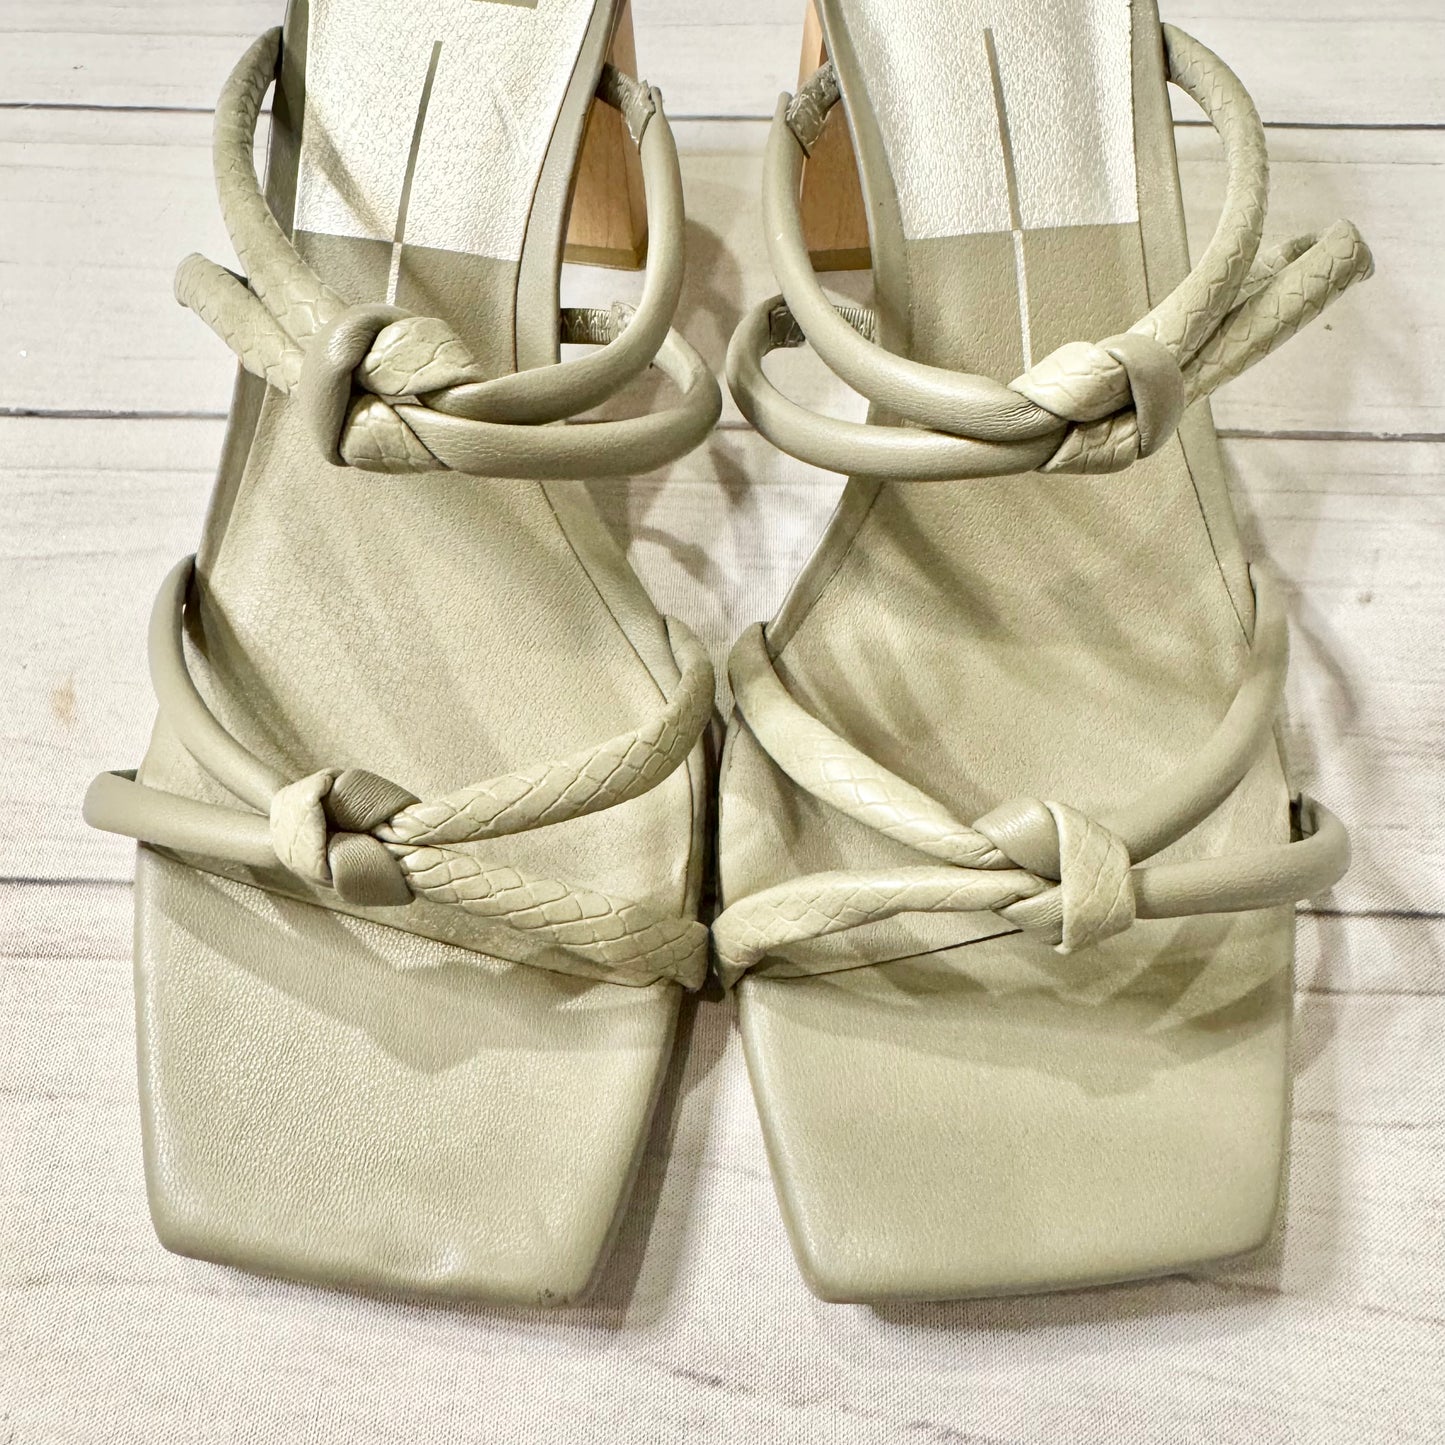 Sandals Heels Block By Dolce Vita  Size: 9